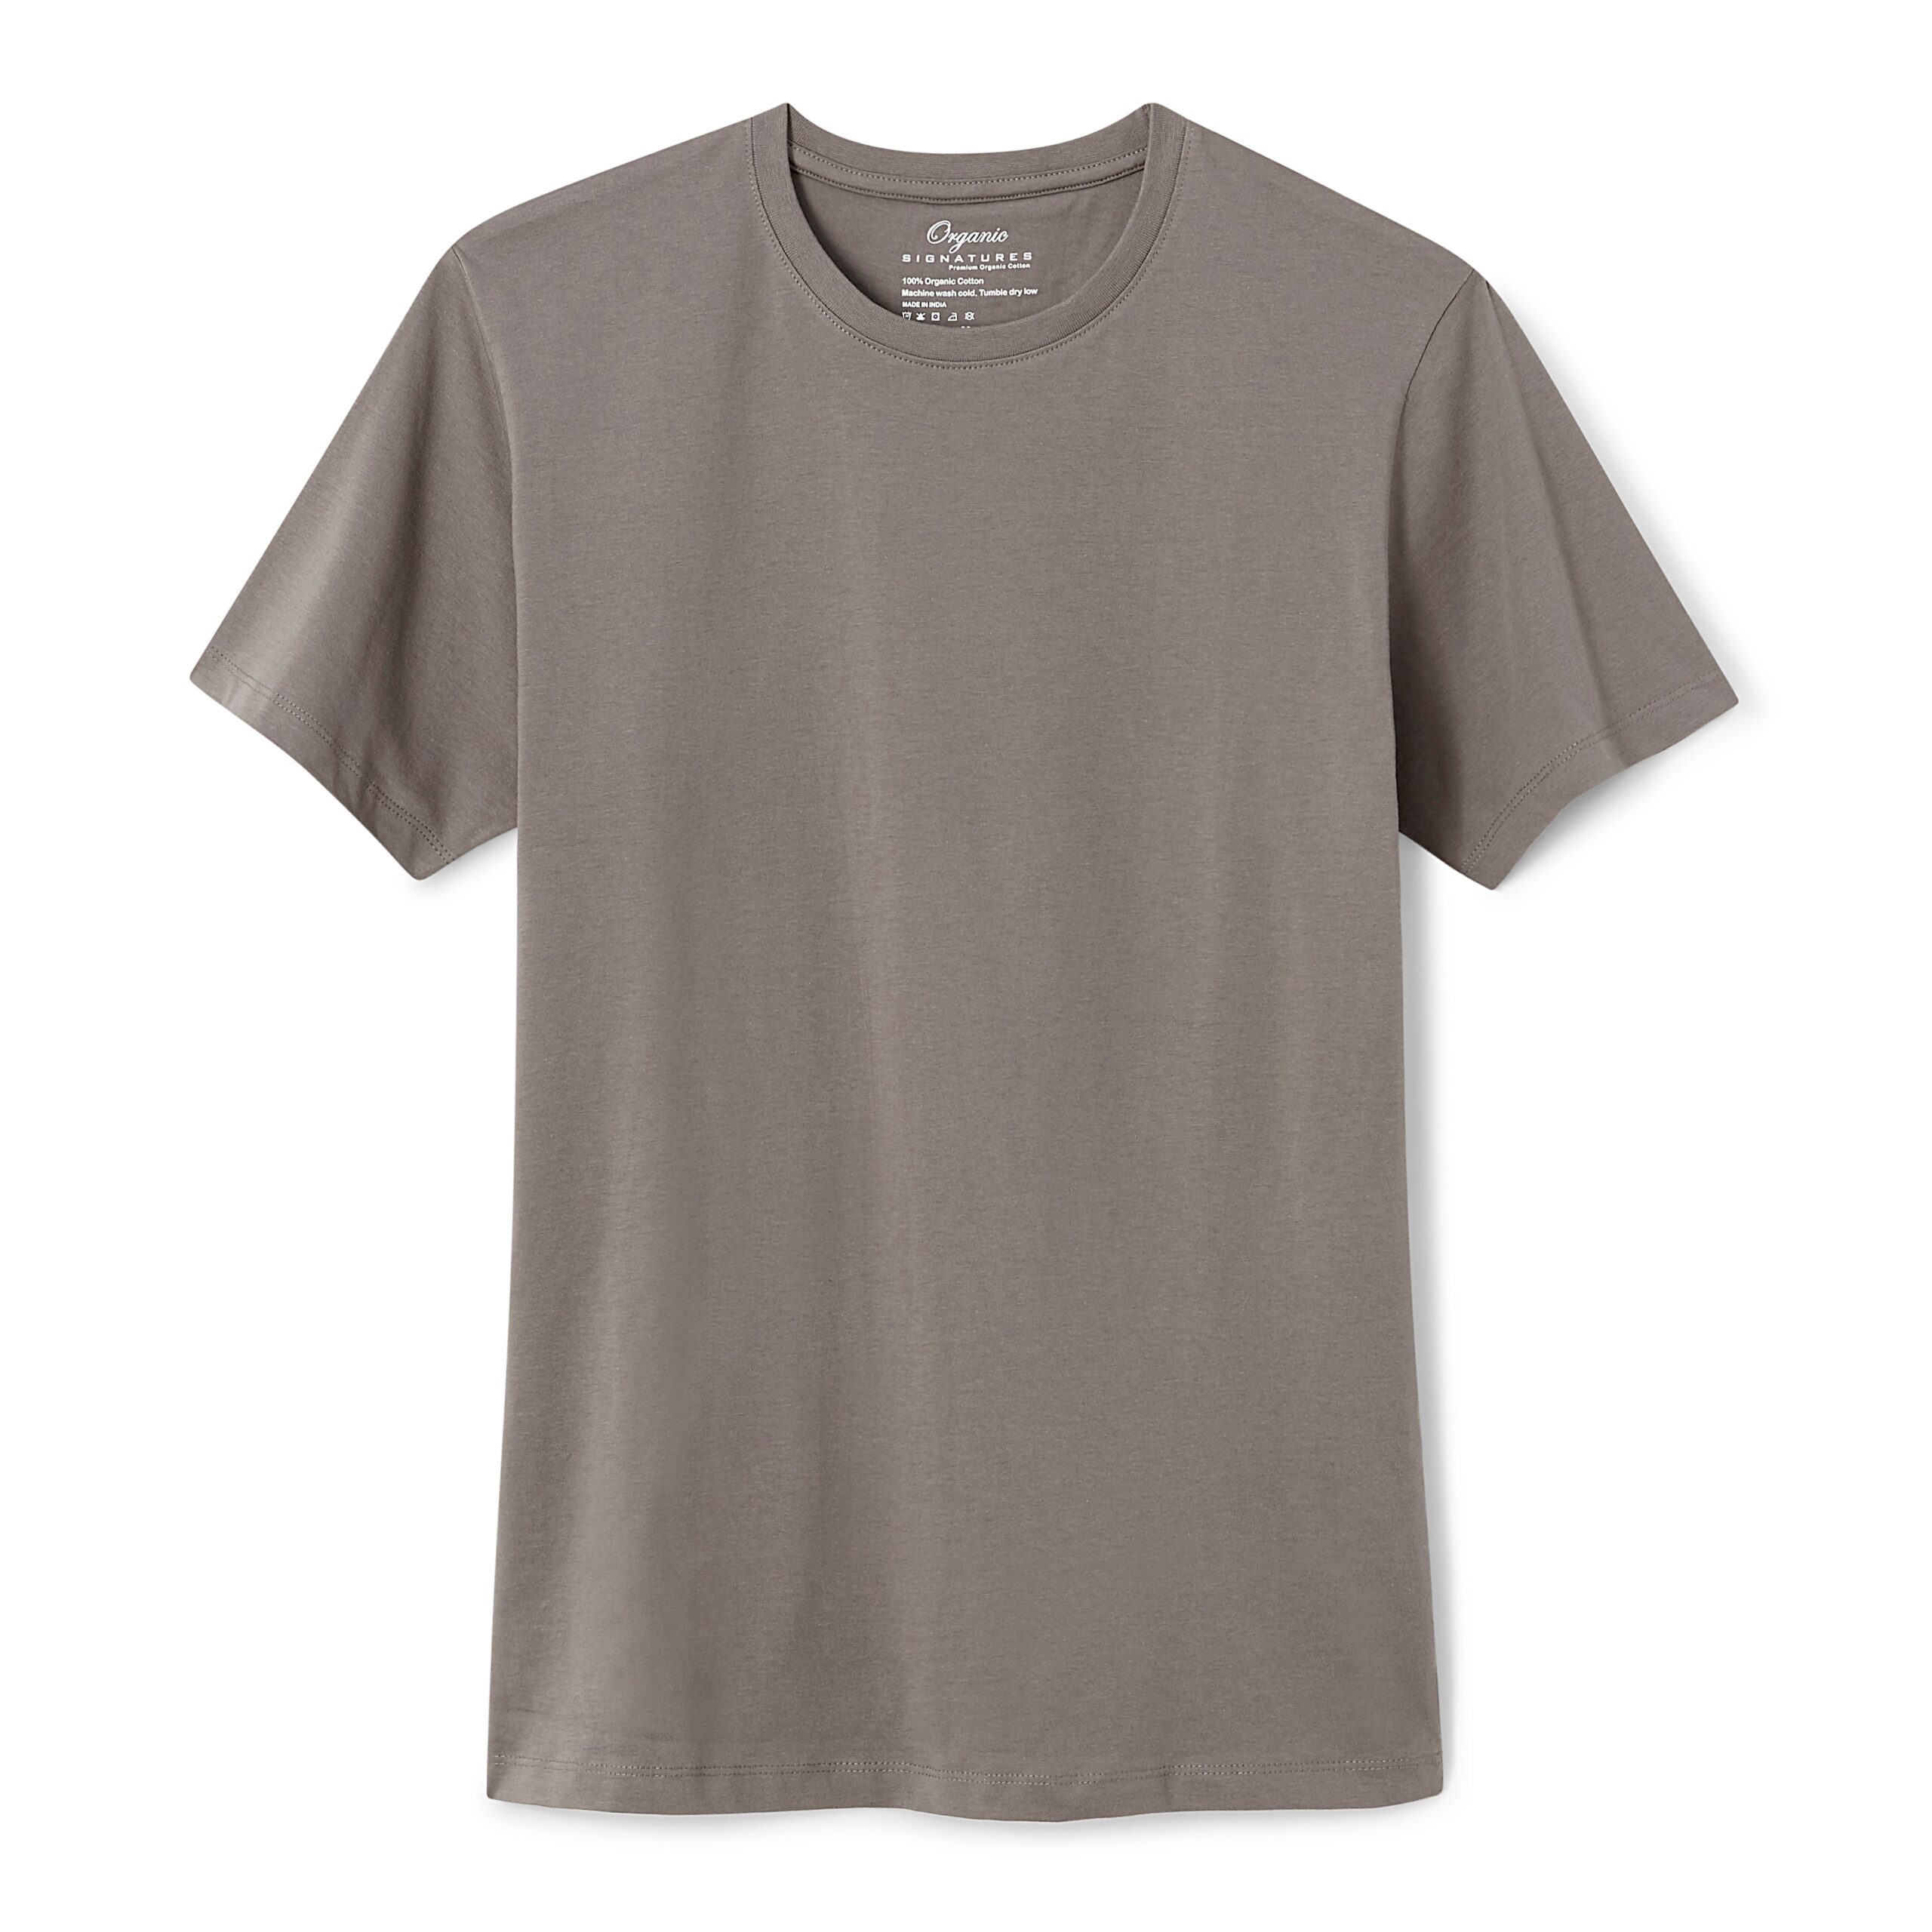 Grey Signatures T-Shirt for Men &#8211; Crew Neck Short Sleeve